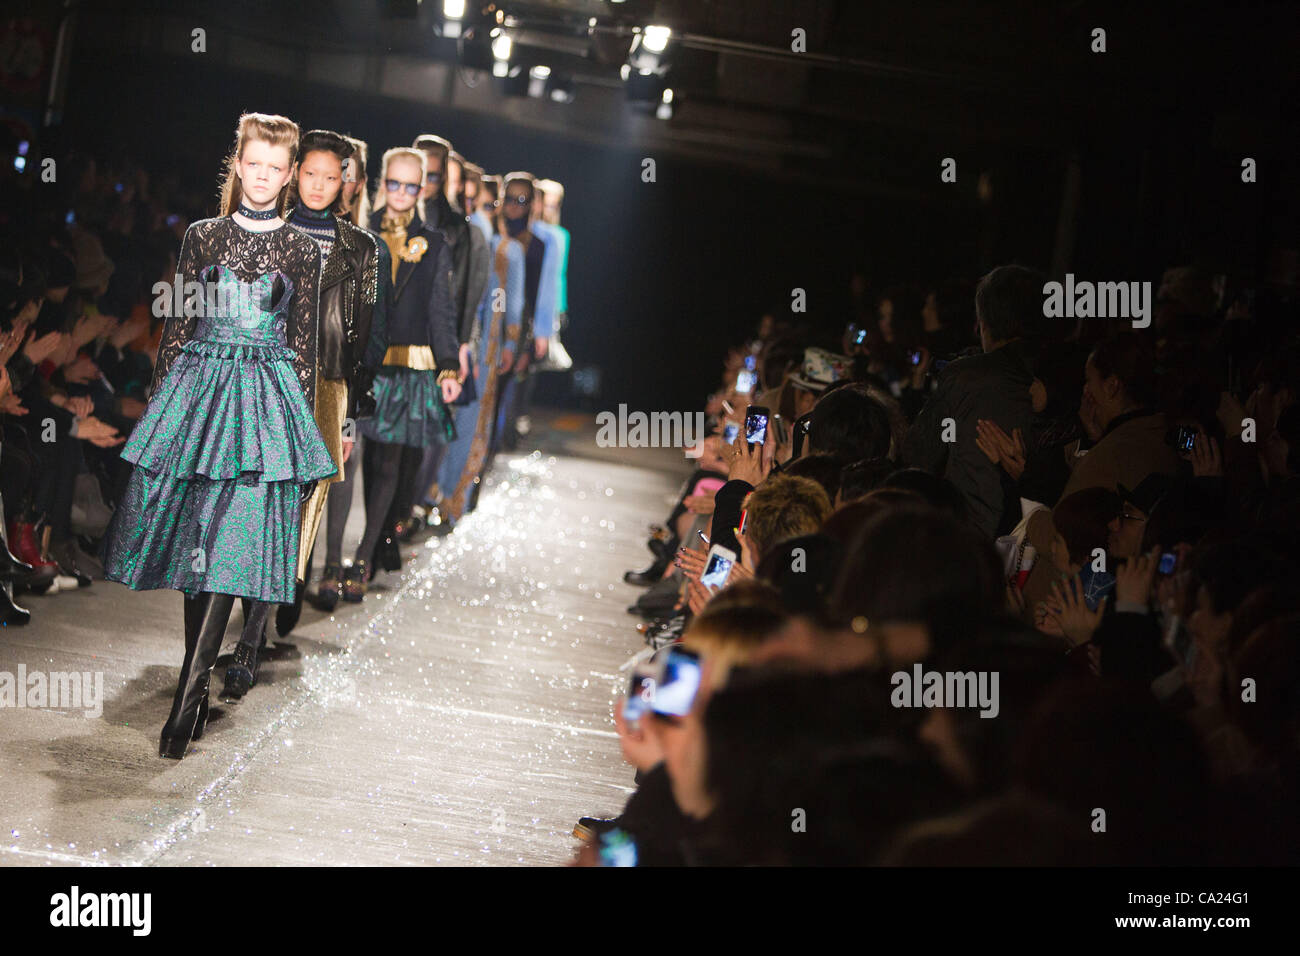 March 23, 2012, Tokyo, Japan - Models walk down the catwalk wearing 